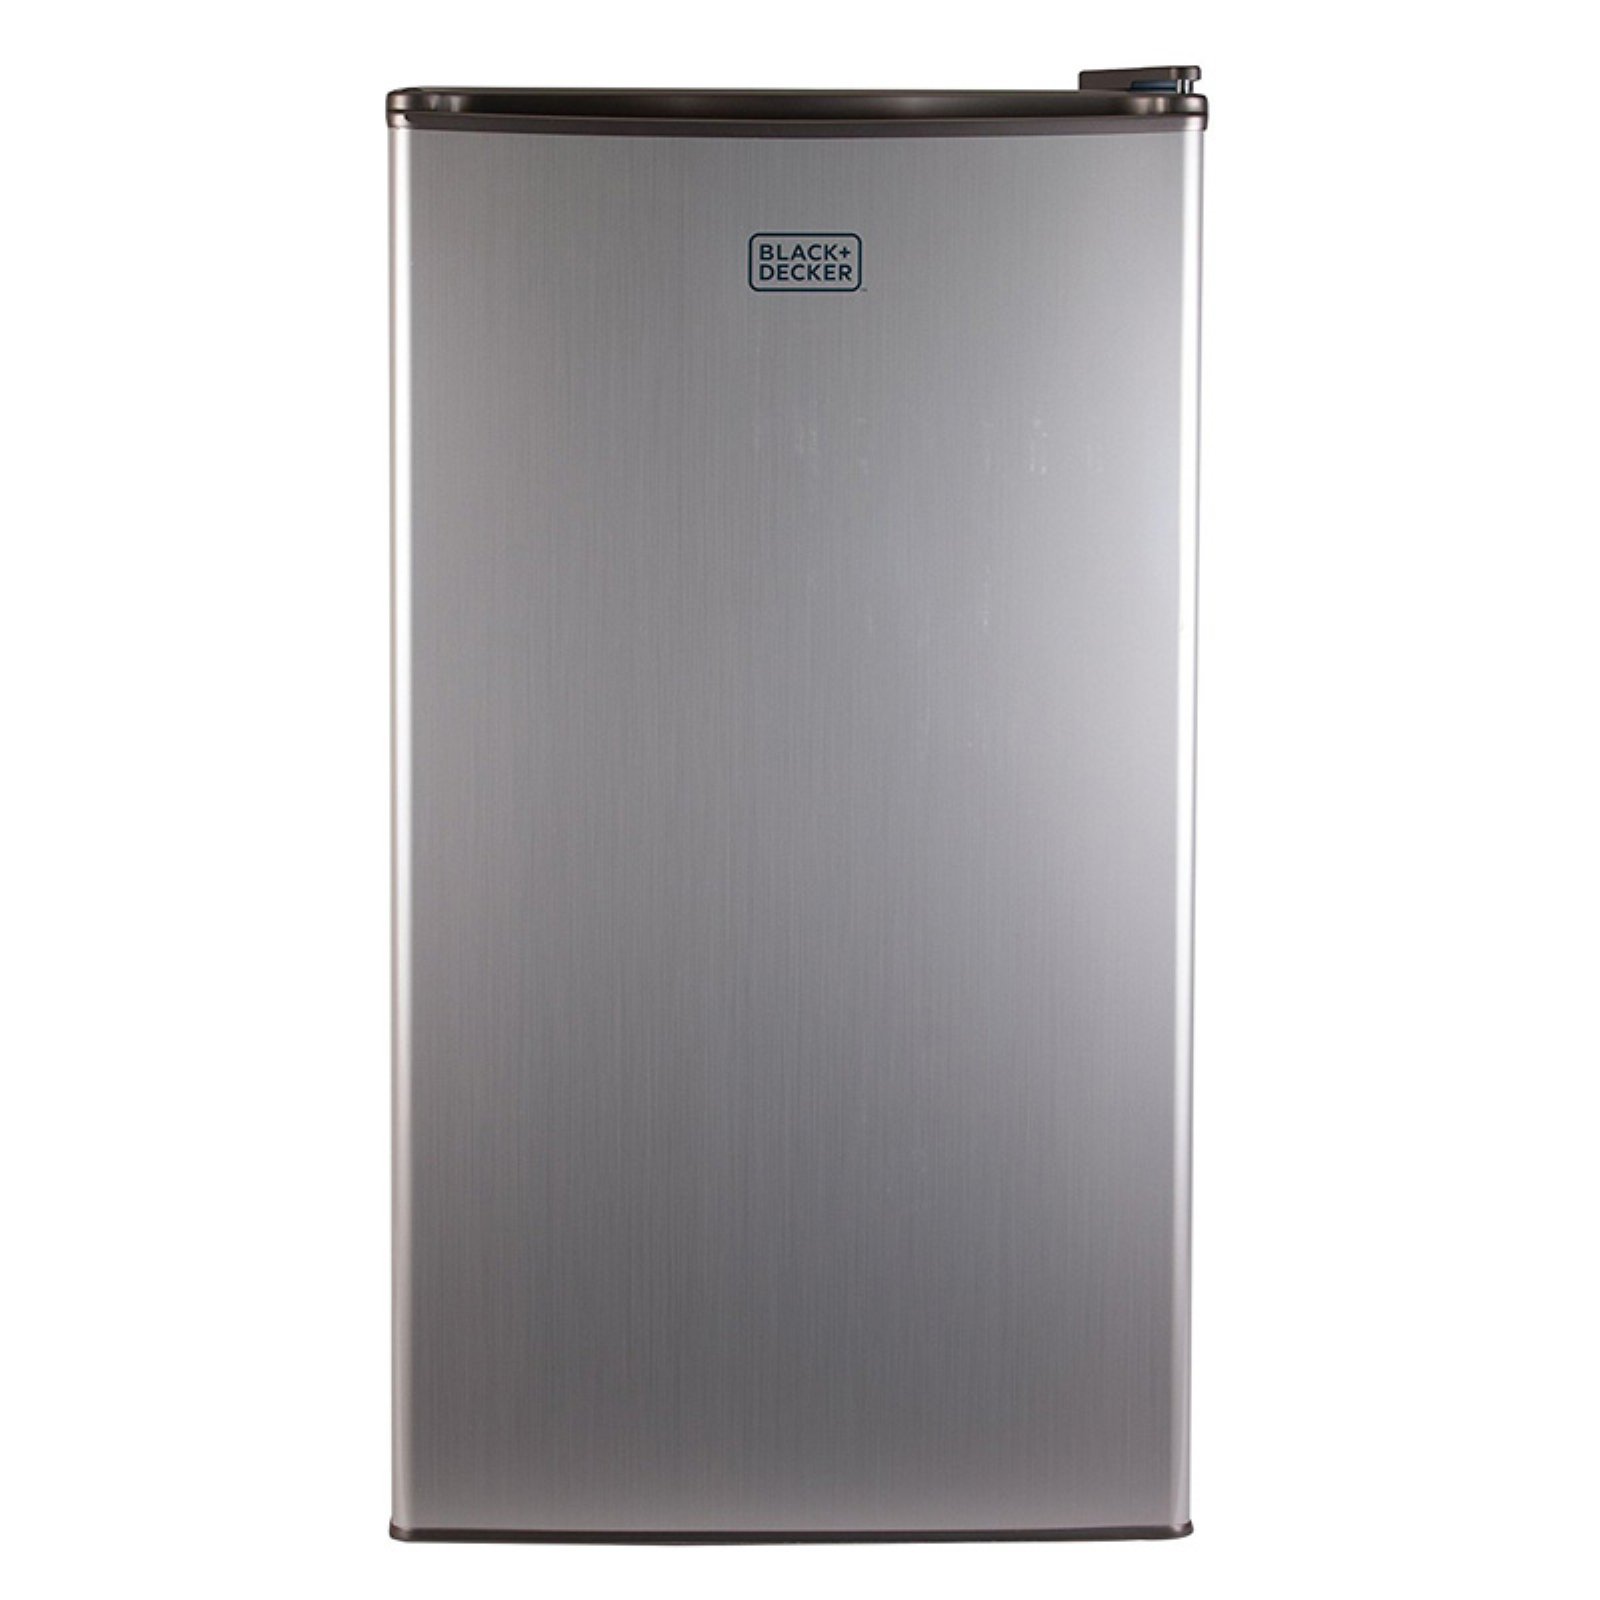 BLACK+DECKER BCRK32V Compact Refrigerator Energy Star Single Door Mini Fridge with Freezer, 3.2 cu. ft., Silver - image 4 of 6